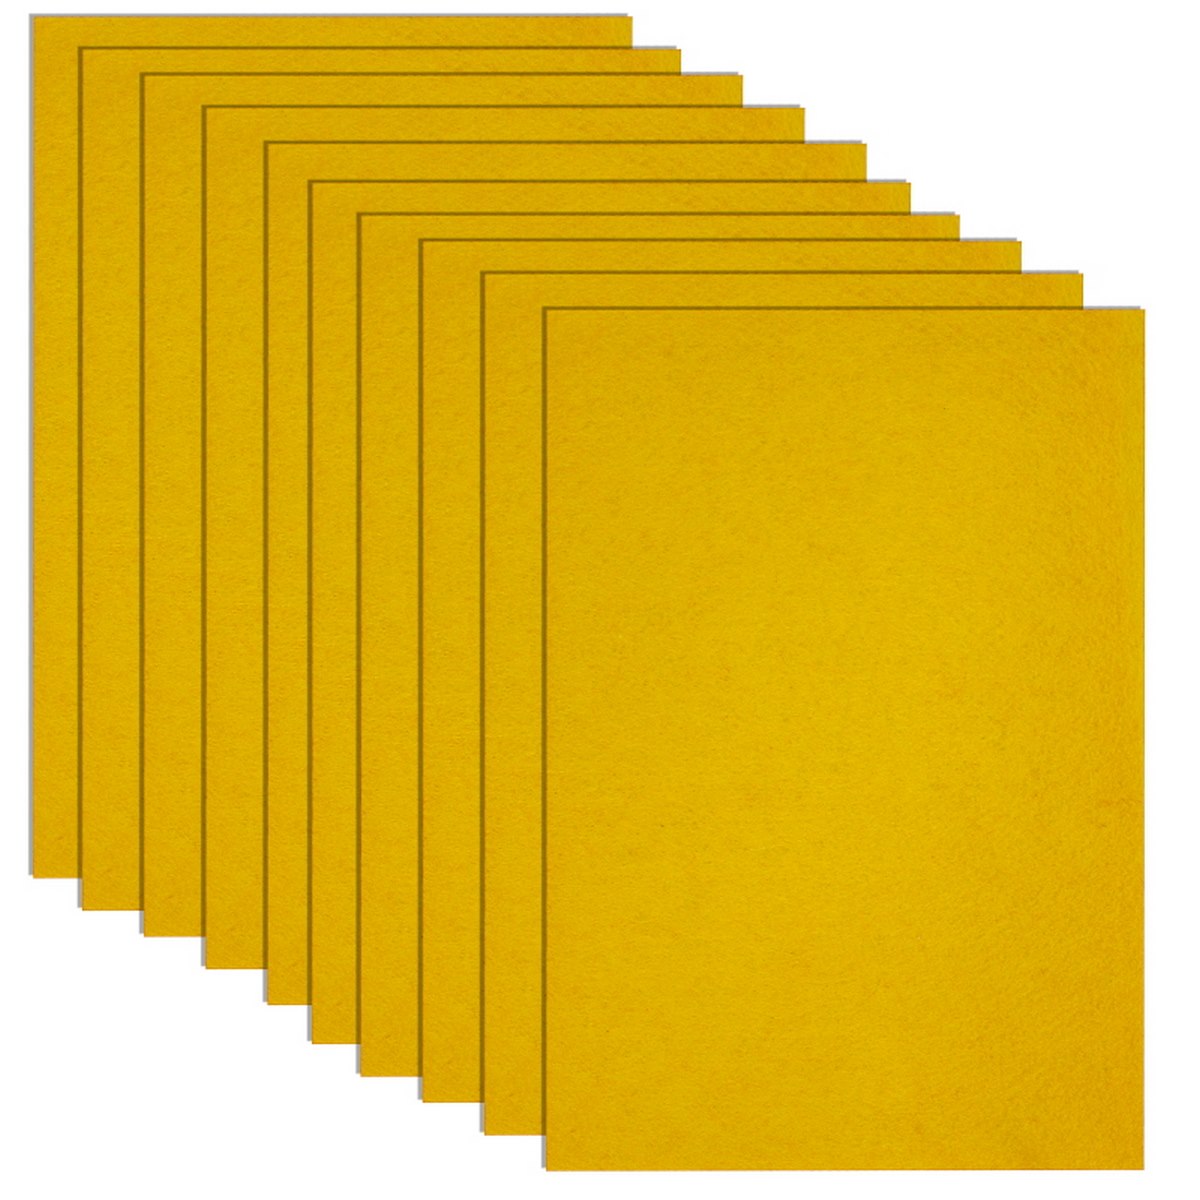 jags-mumbai Non-Woven & Felt Sheets A4 Nonwoven Felt Sheet Yellow 79